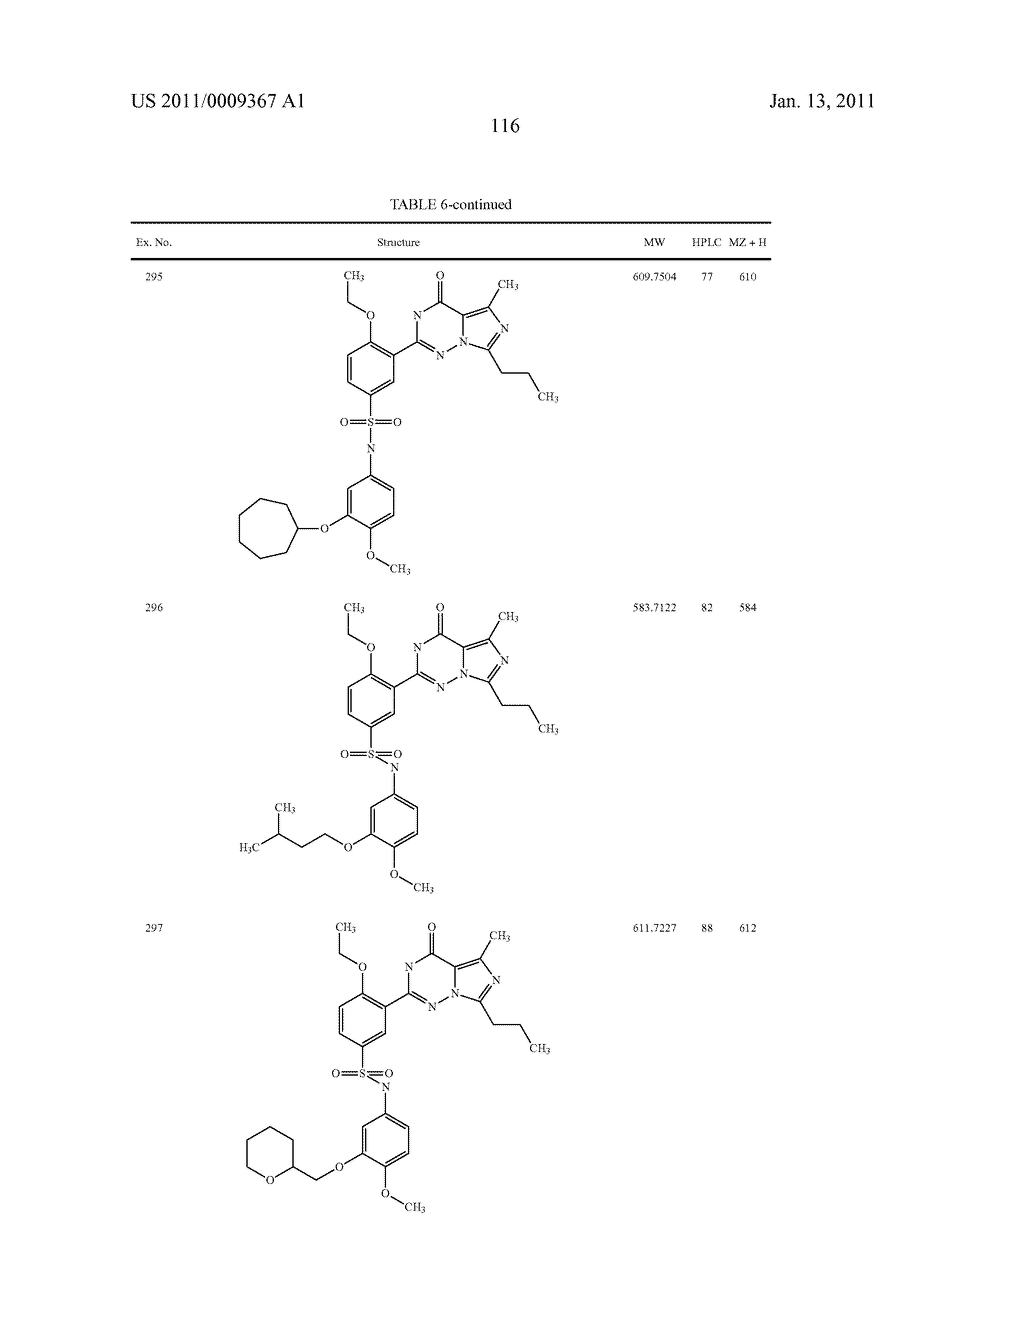 2-PHENYL SUBSTITUTED IMIDAZOTRIAZINONES AS PHOSPHODIESTERASE INHIBITORS - diagram, schematic, and image 117